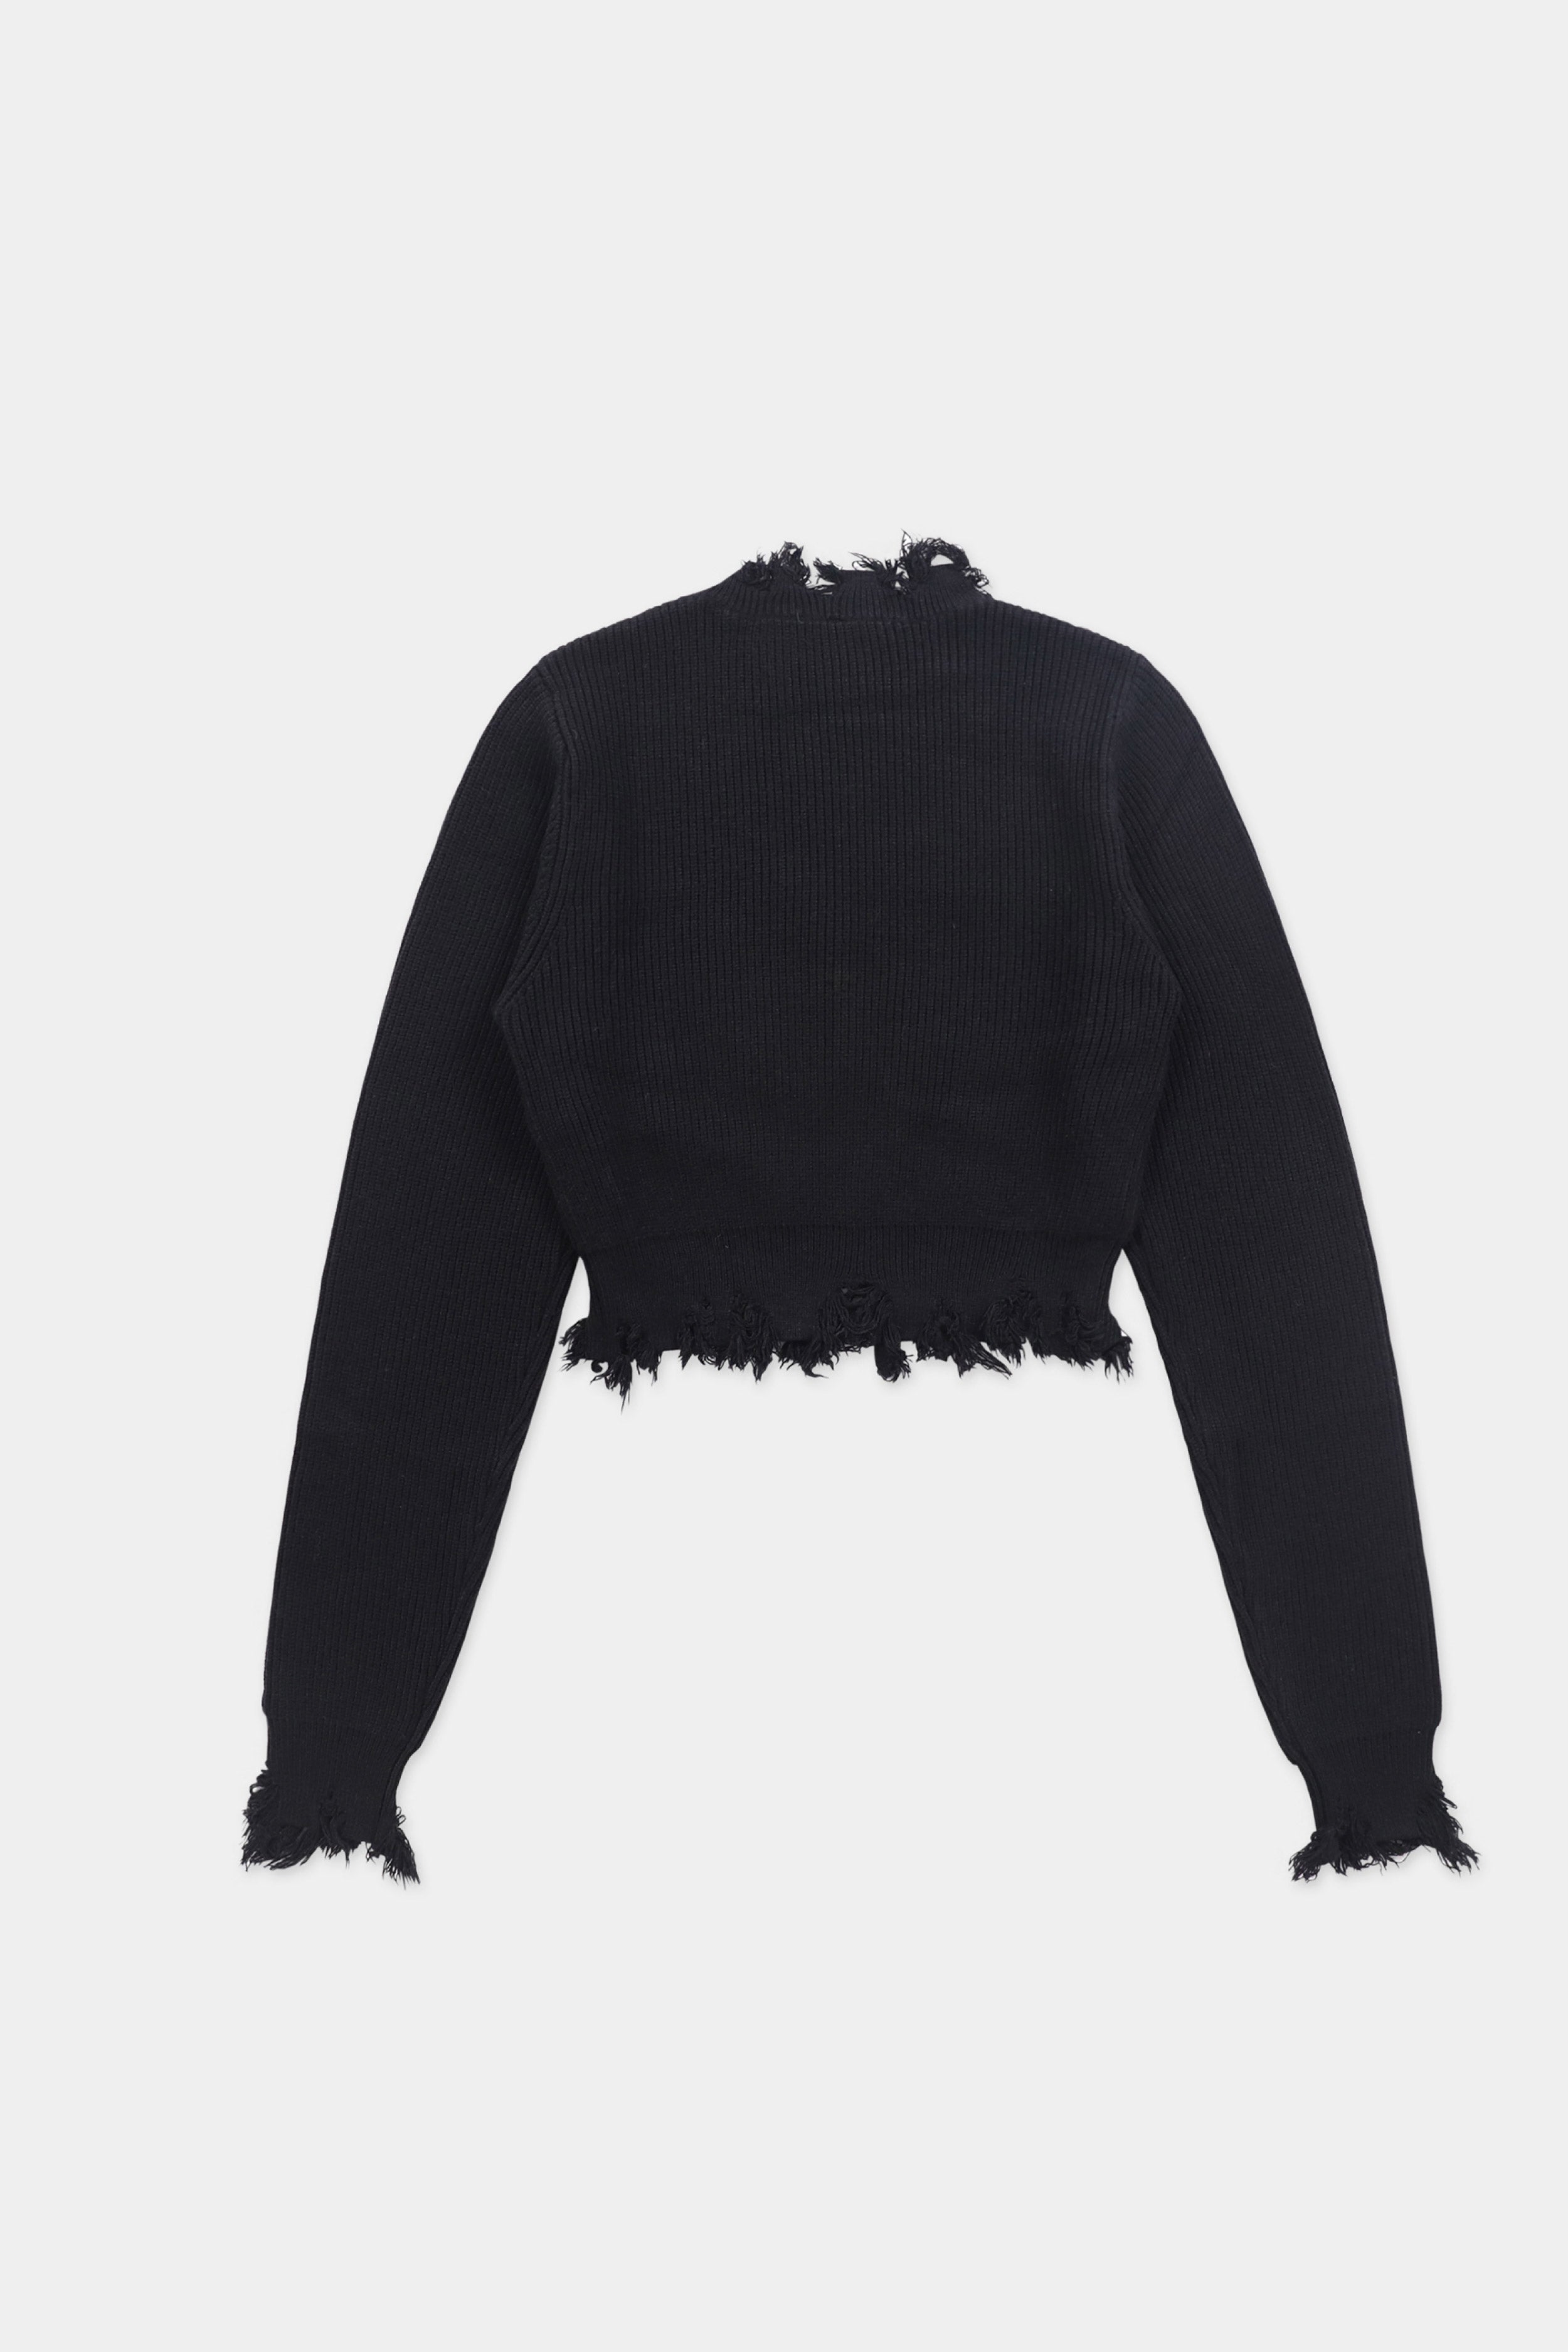 Badblood Destroyed Cropped Sweater Black